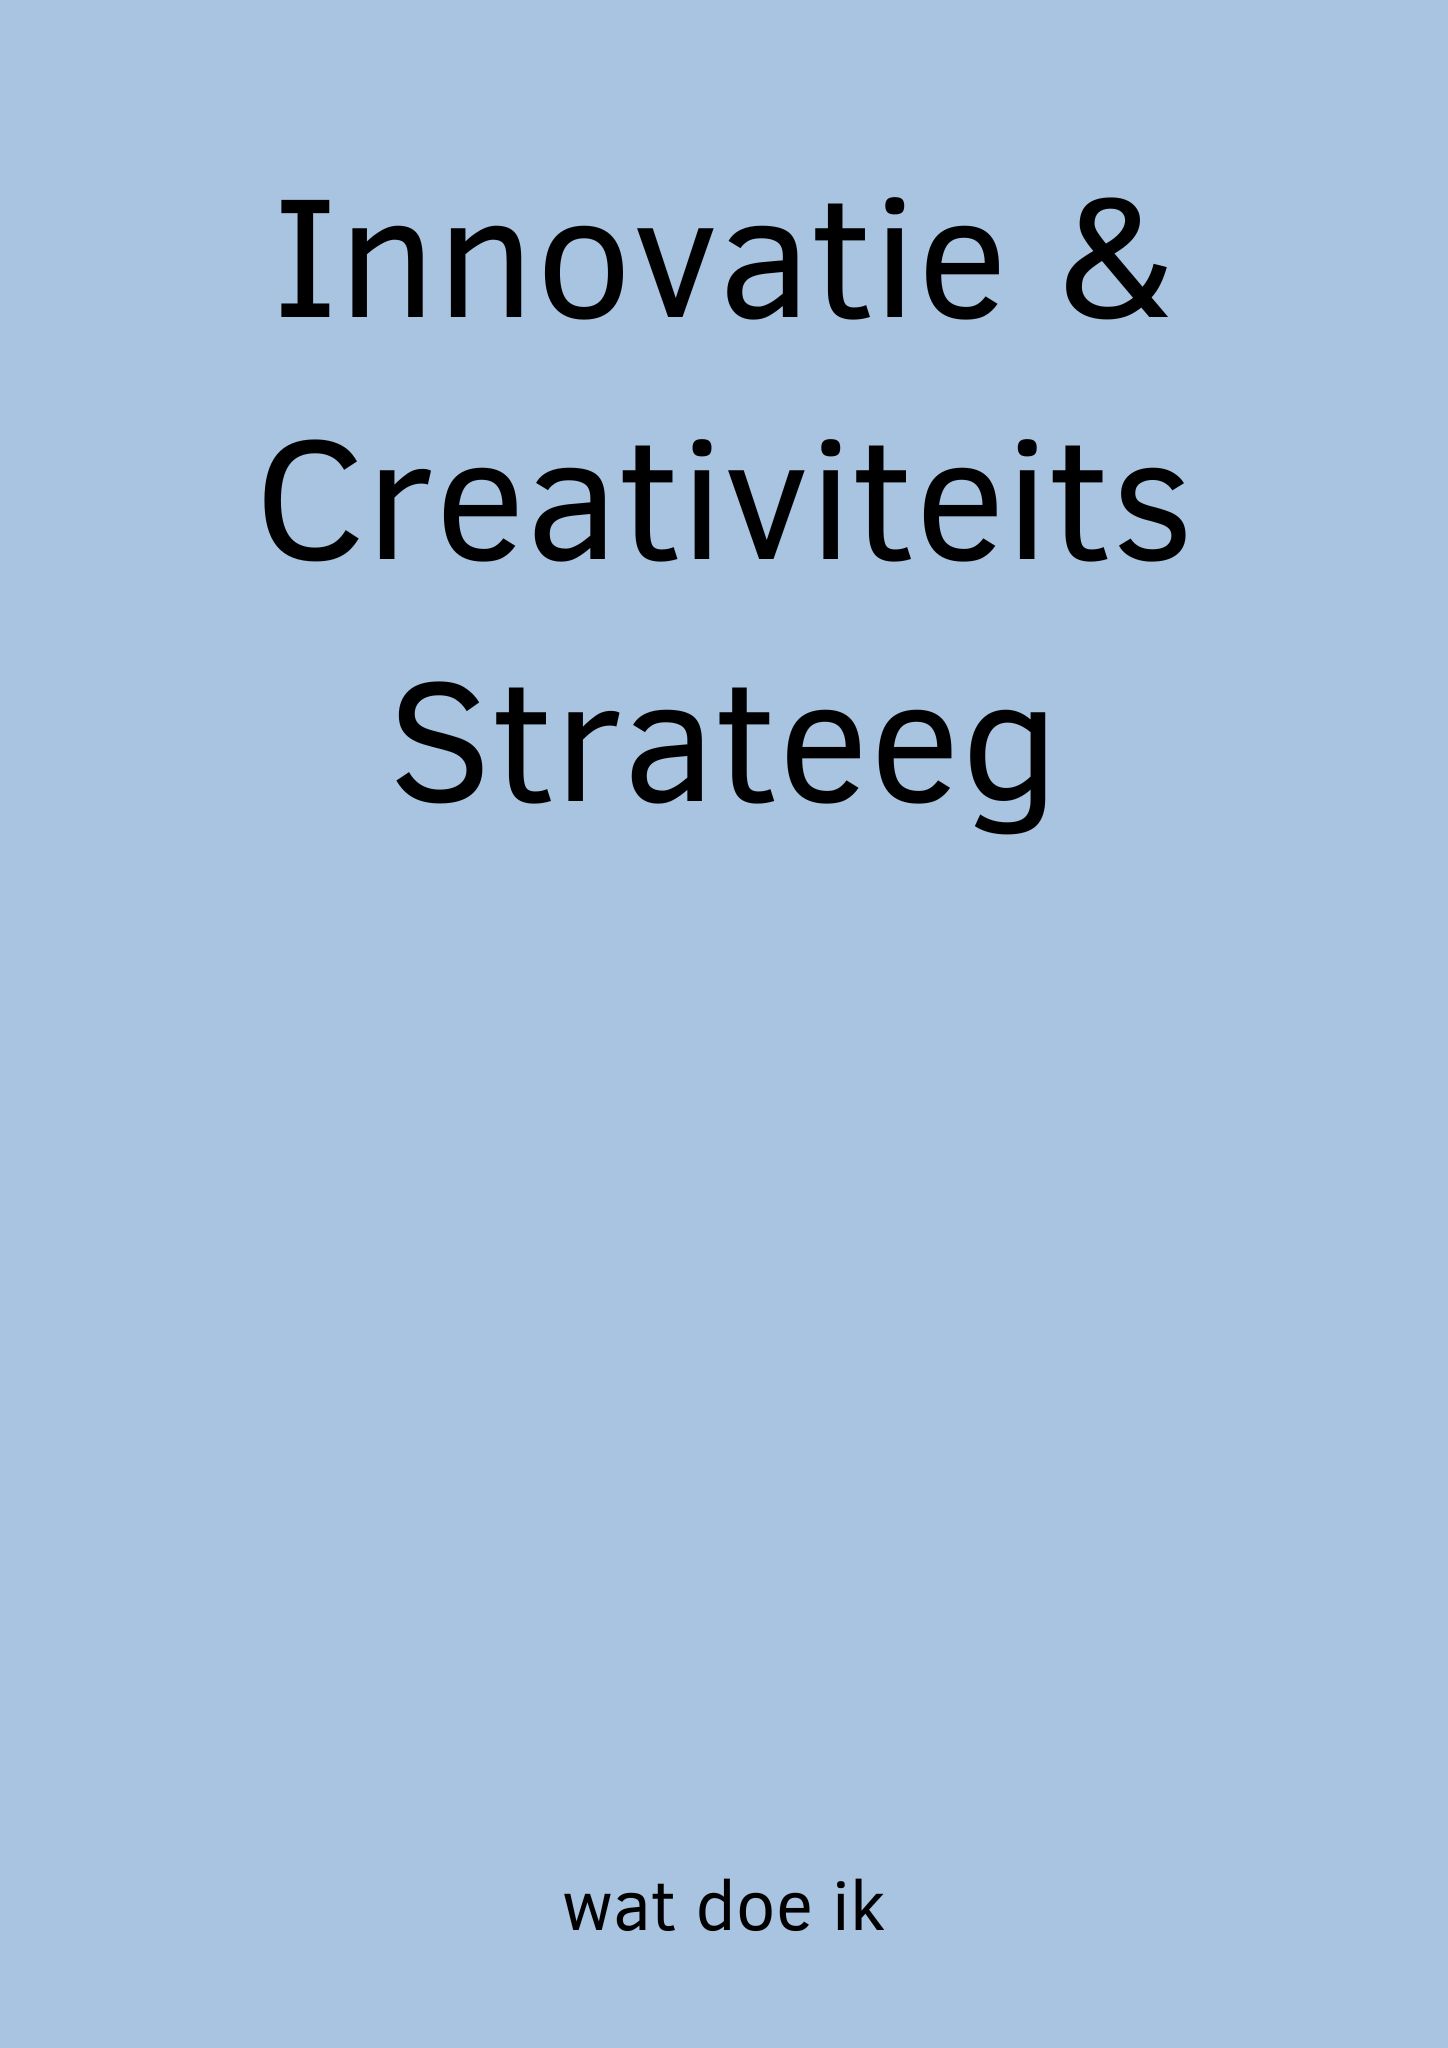 Innovatie & Creativiteits strateeg